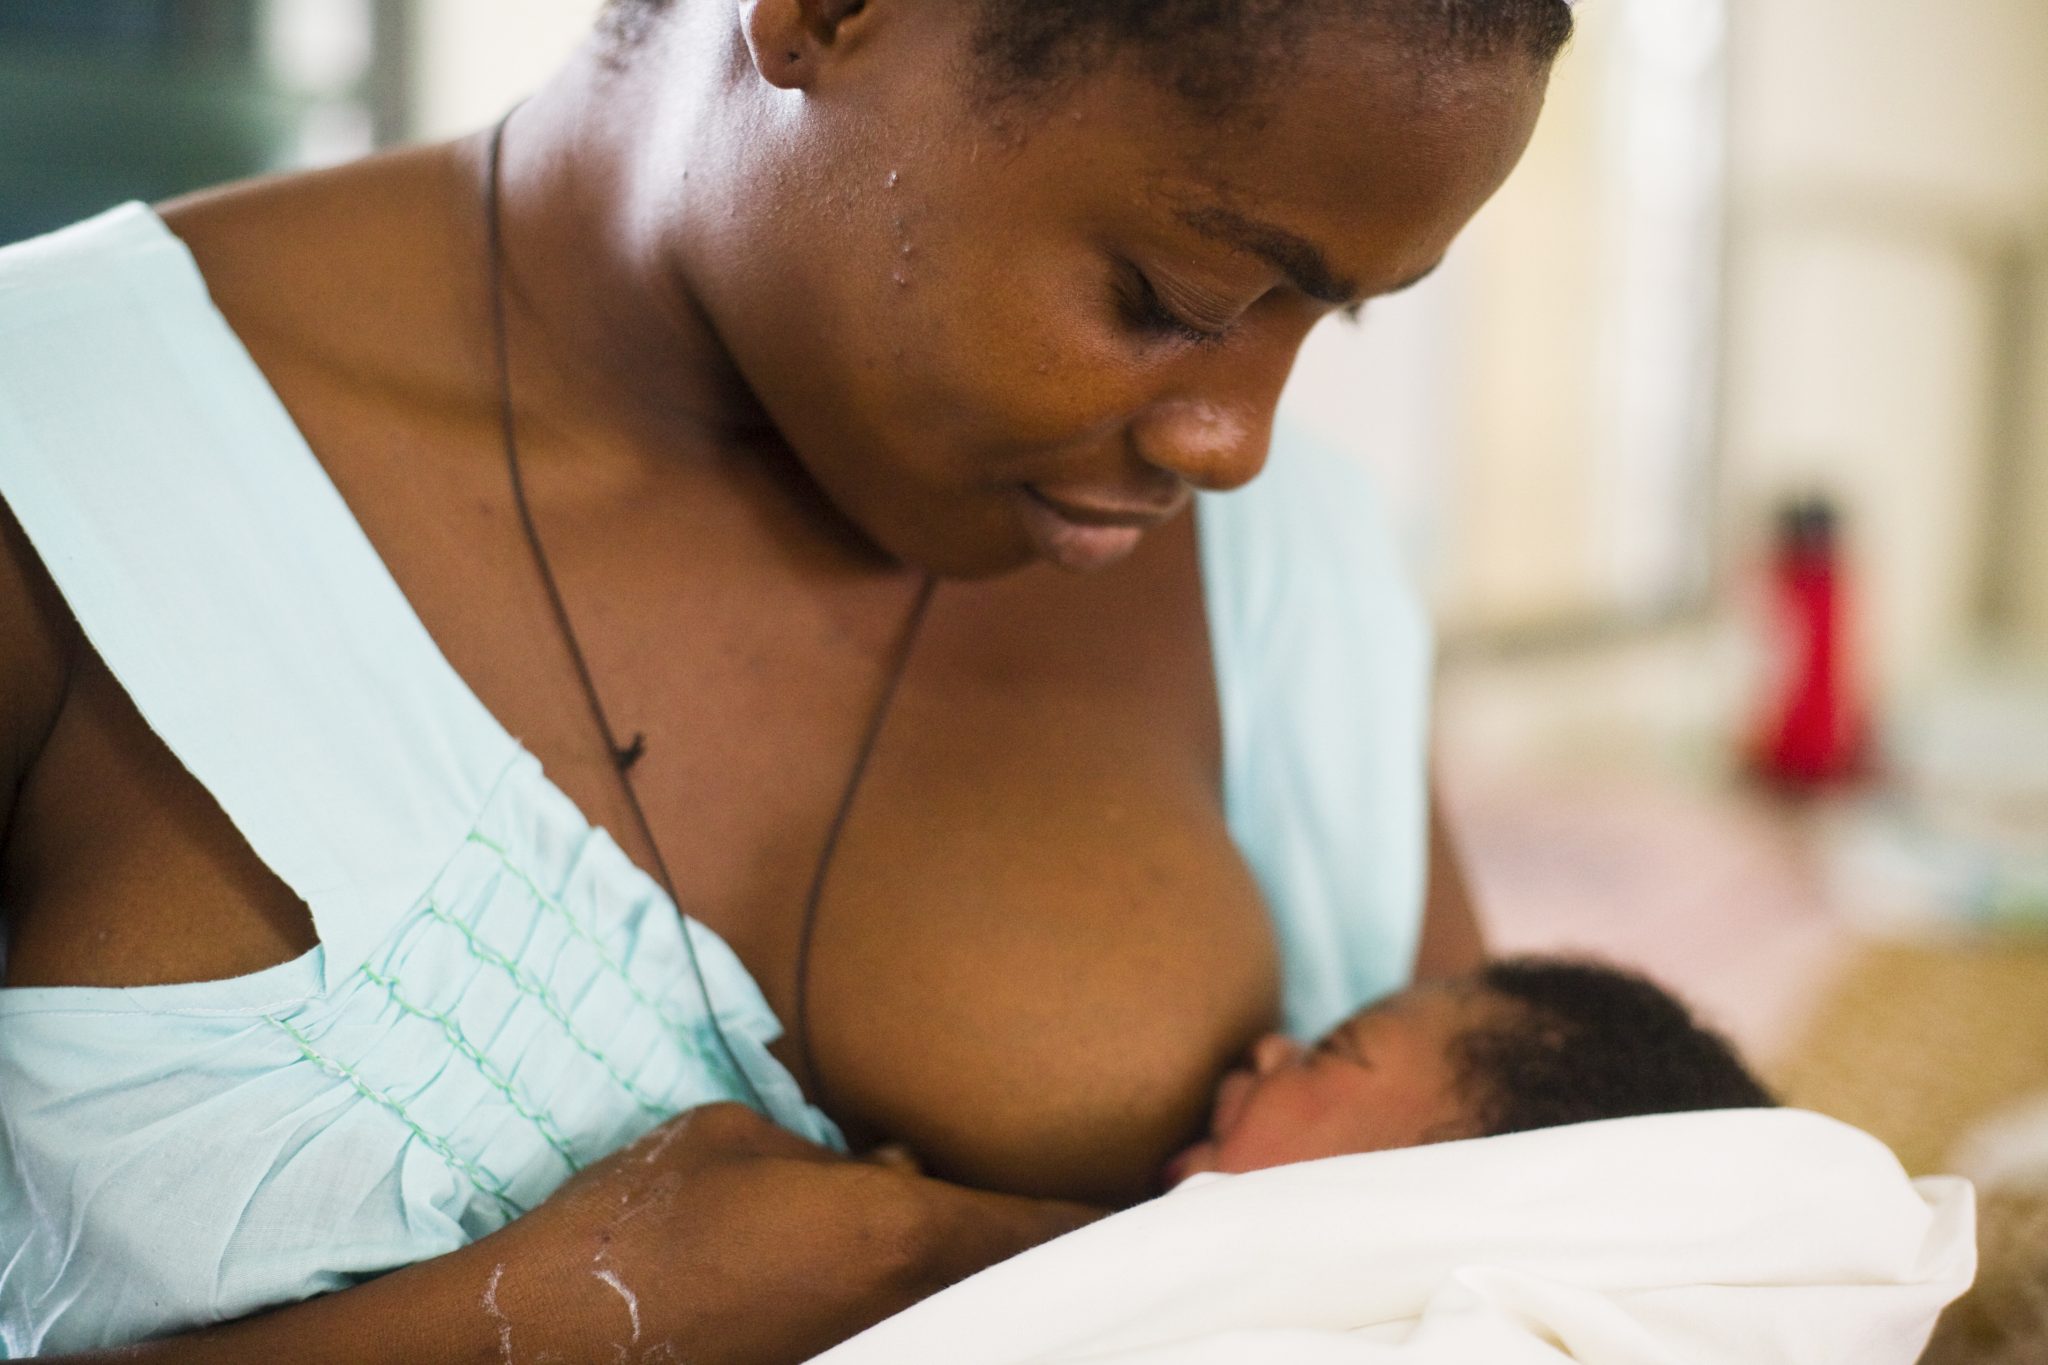 https://thousanddays.org/wp-content/uploads/2019/02/Mom-Breastfeeding-6-Credit-Bill-Melinda-Gates-Foundation.jpg